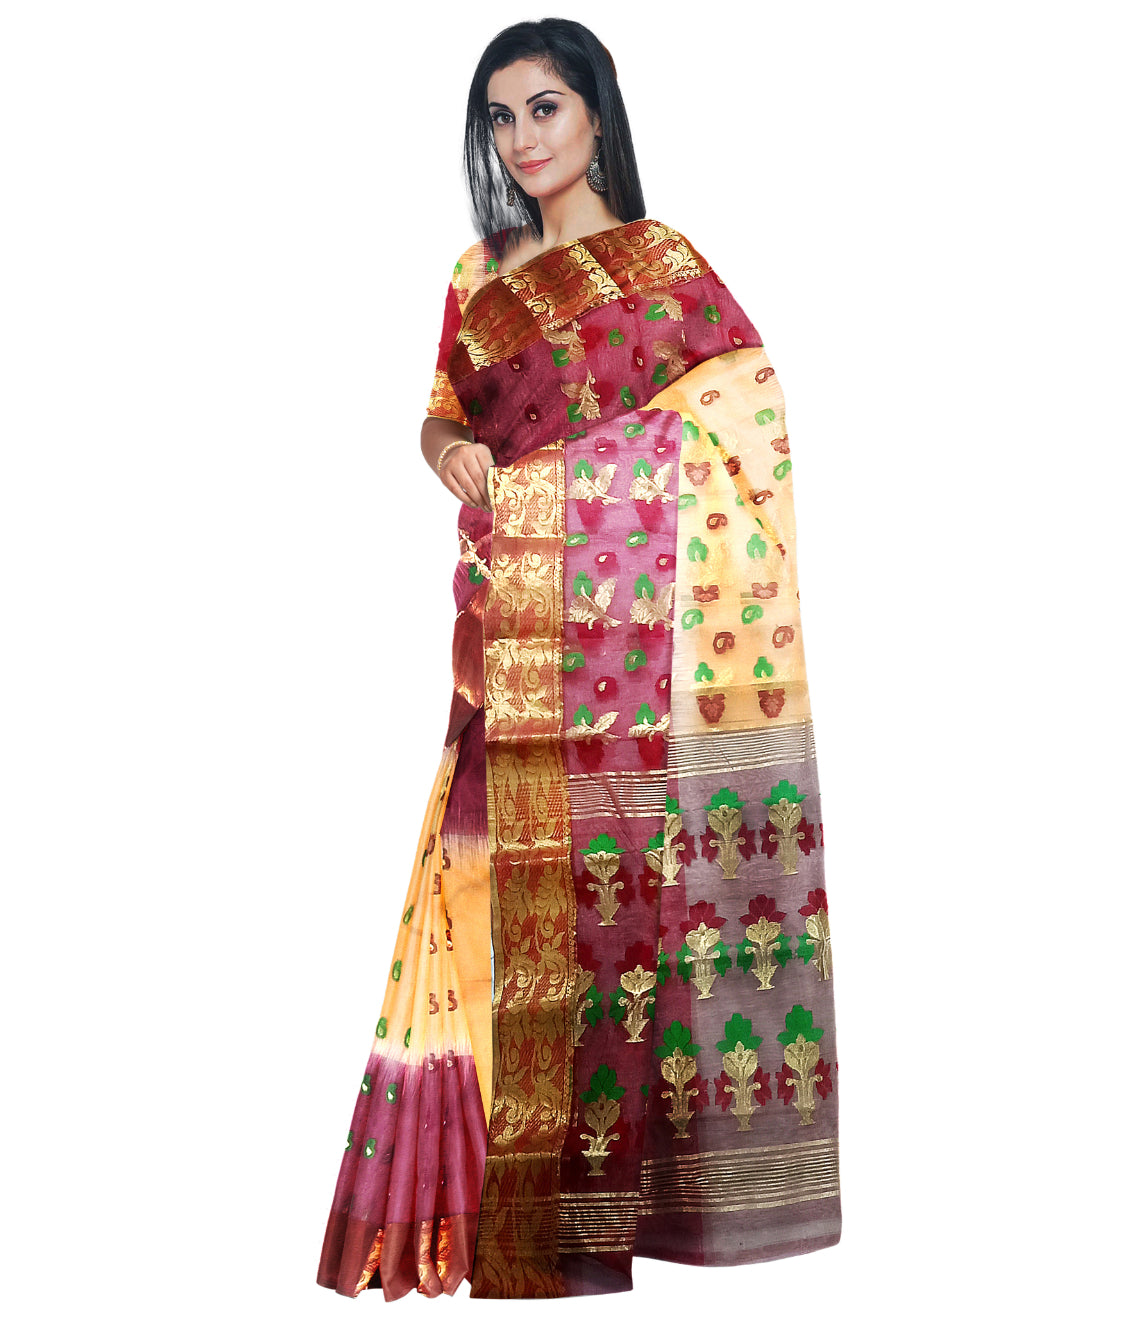 Pradip Fabrics Ethnic Women's Tant Tussar Silk Peach and Maroon Color Saree